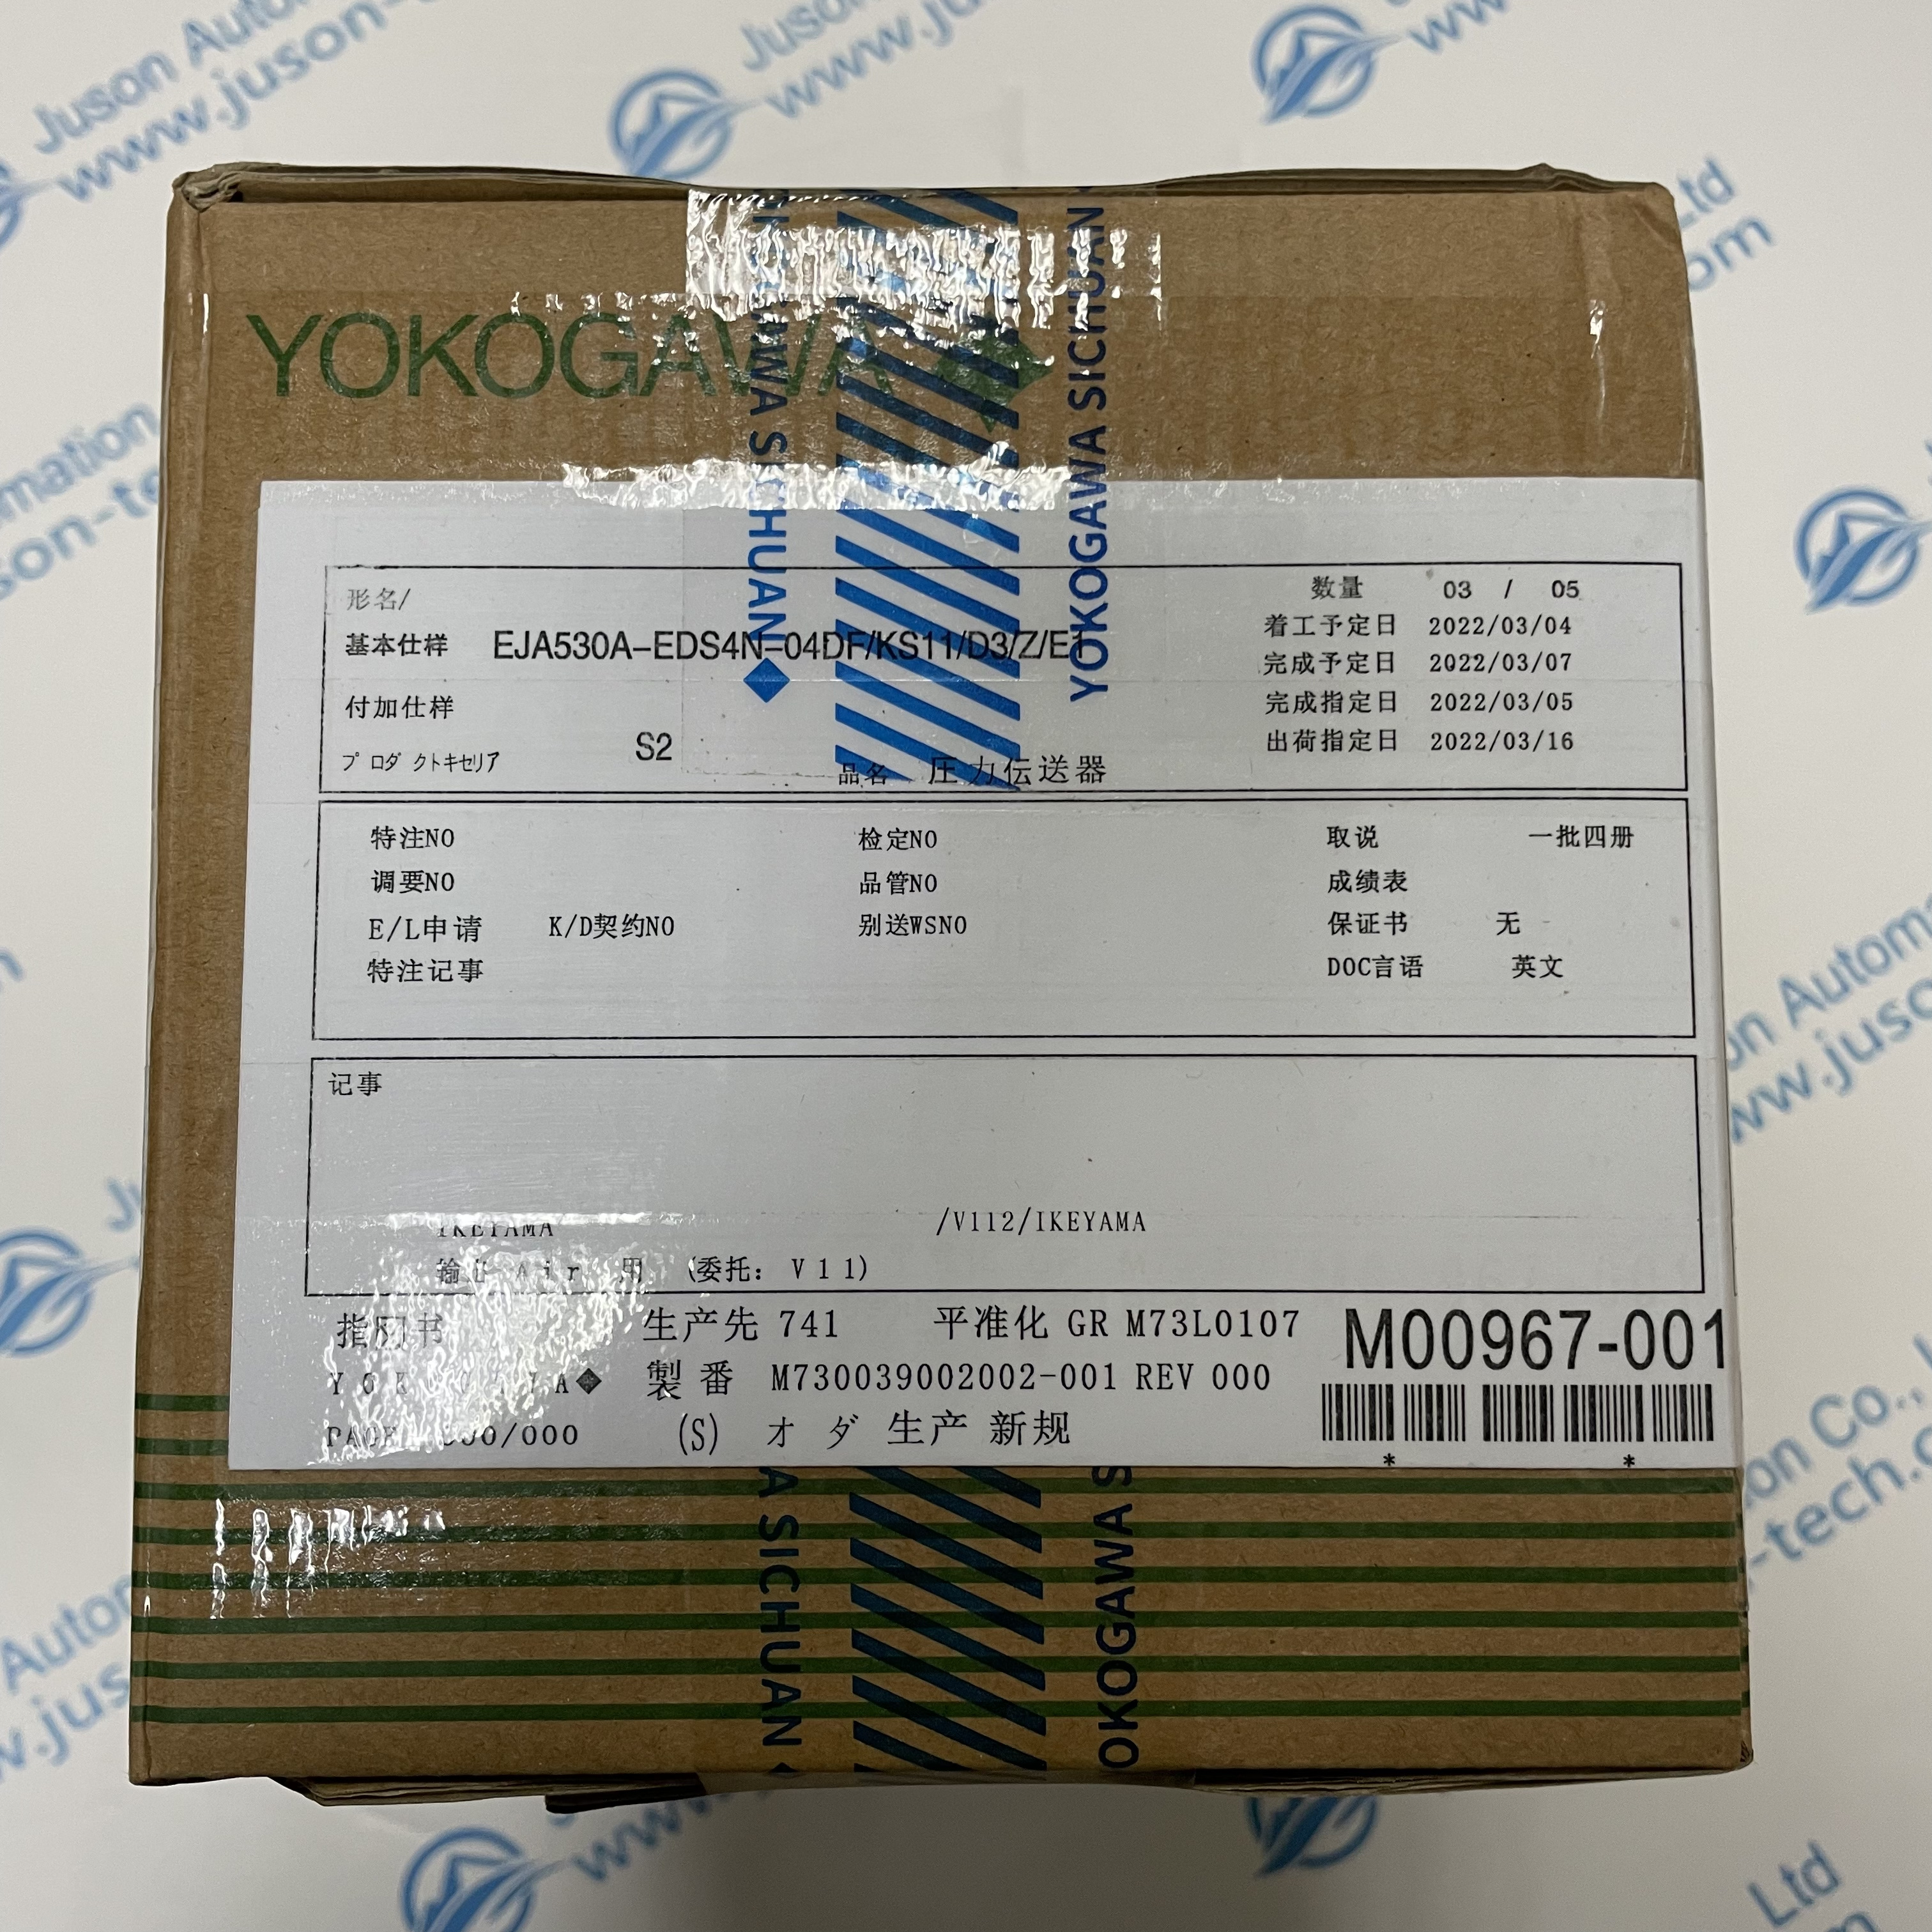 Yokogawa pressure transmitter EJA-530A-EDS4N-04DF KS11 D3 Z E1 